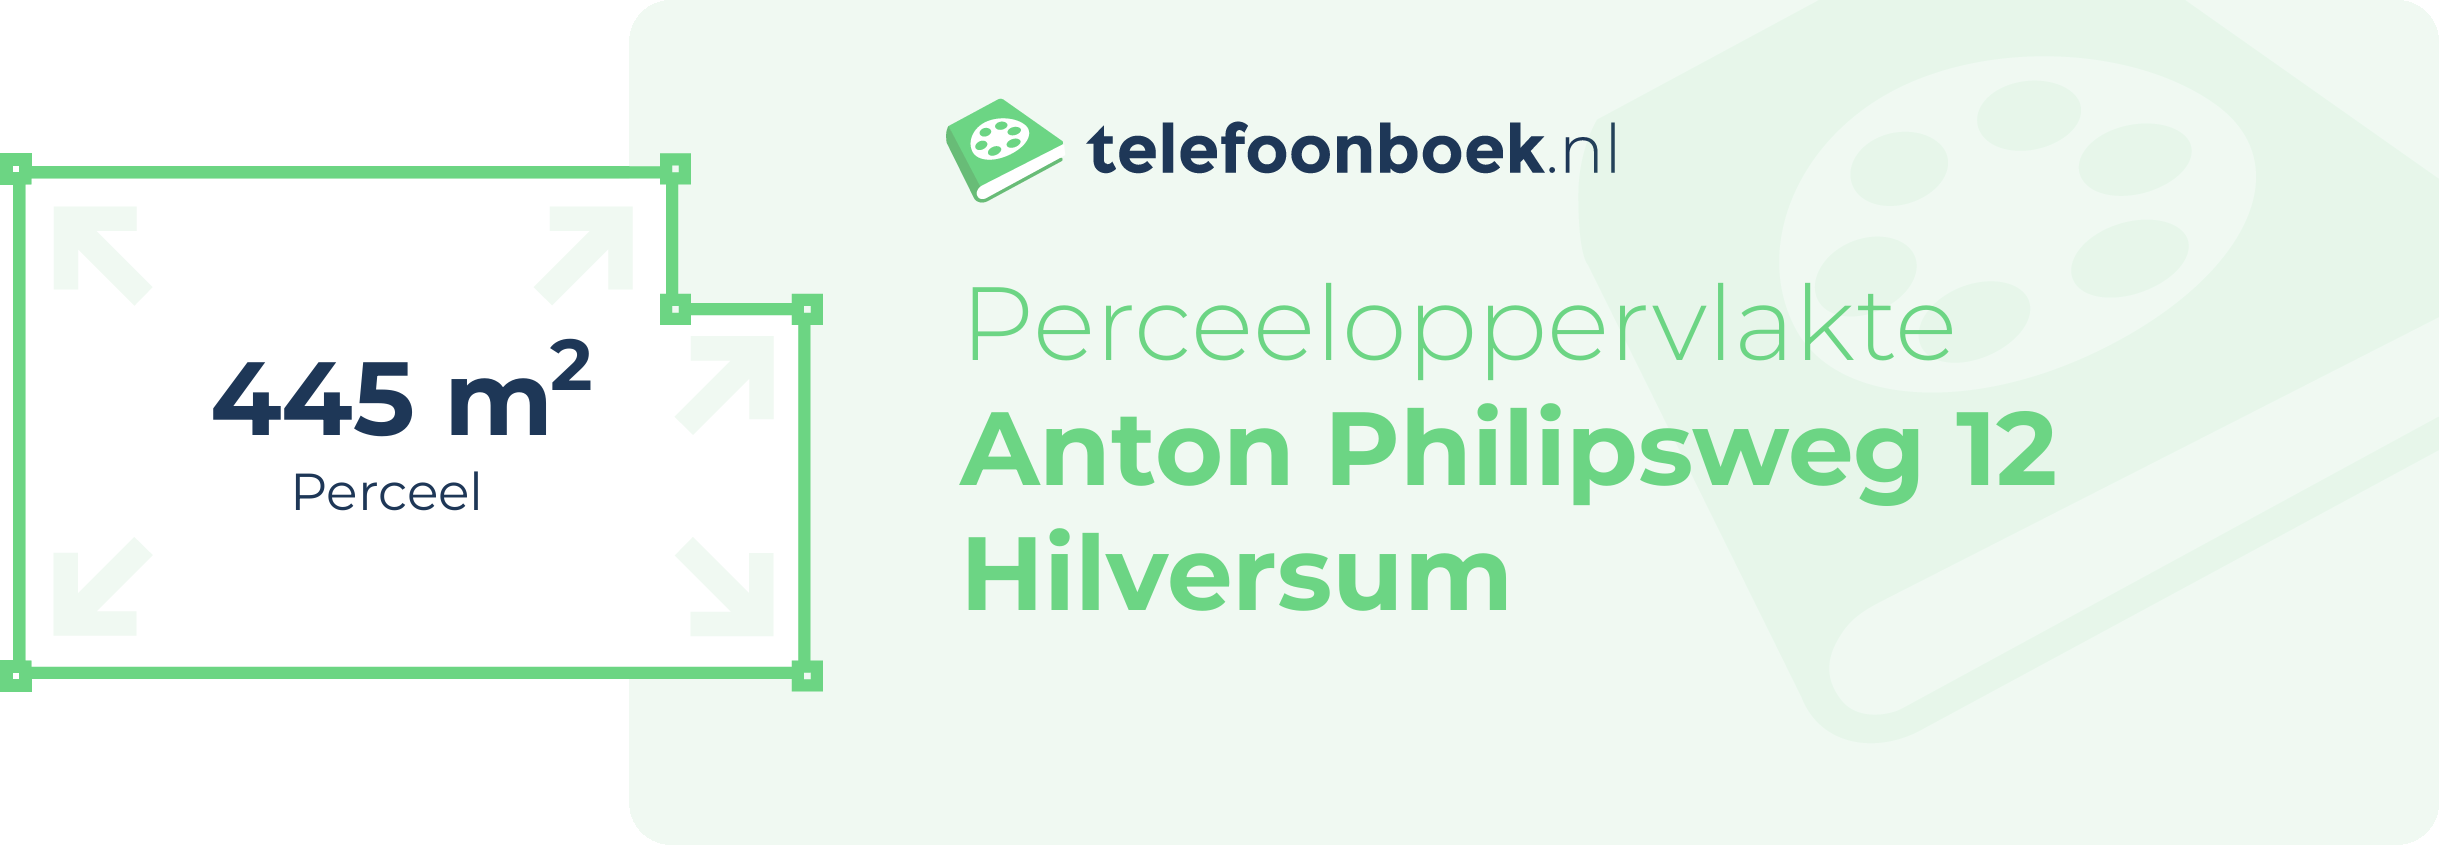 Perceeloppervlakte Anton Philipsweg 12 Hilversum